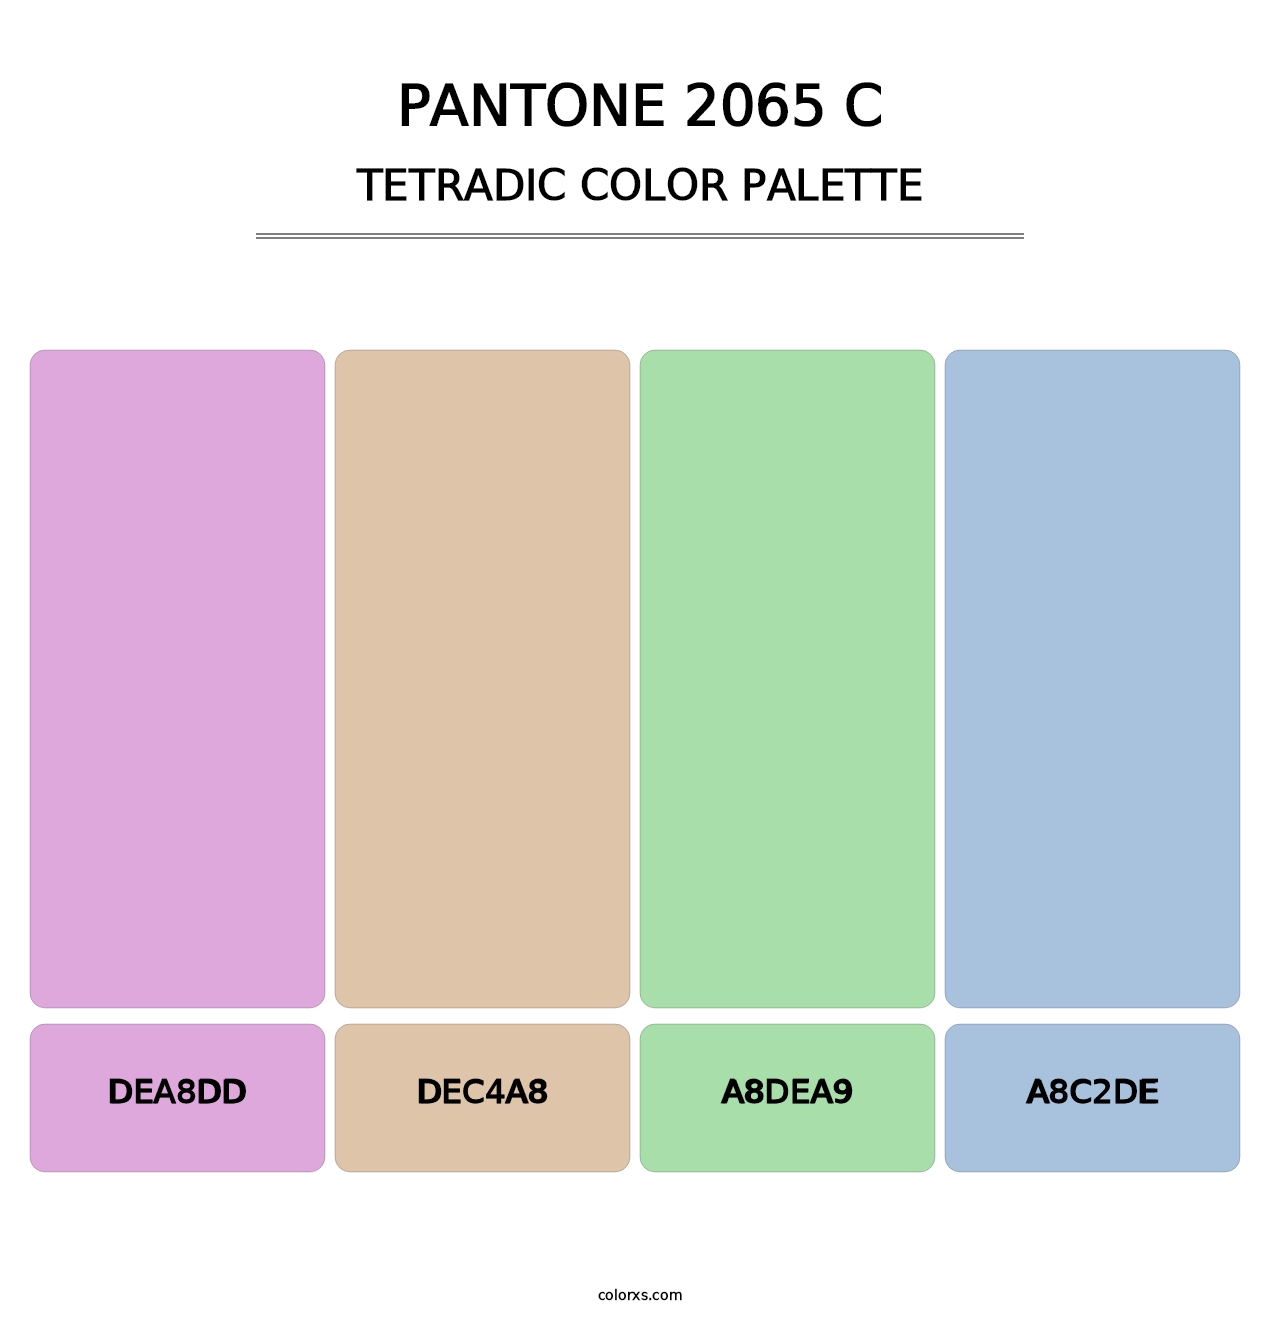 PANTONE 2065 C - Tetradic Color Palette